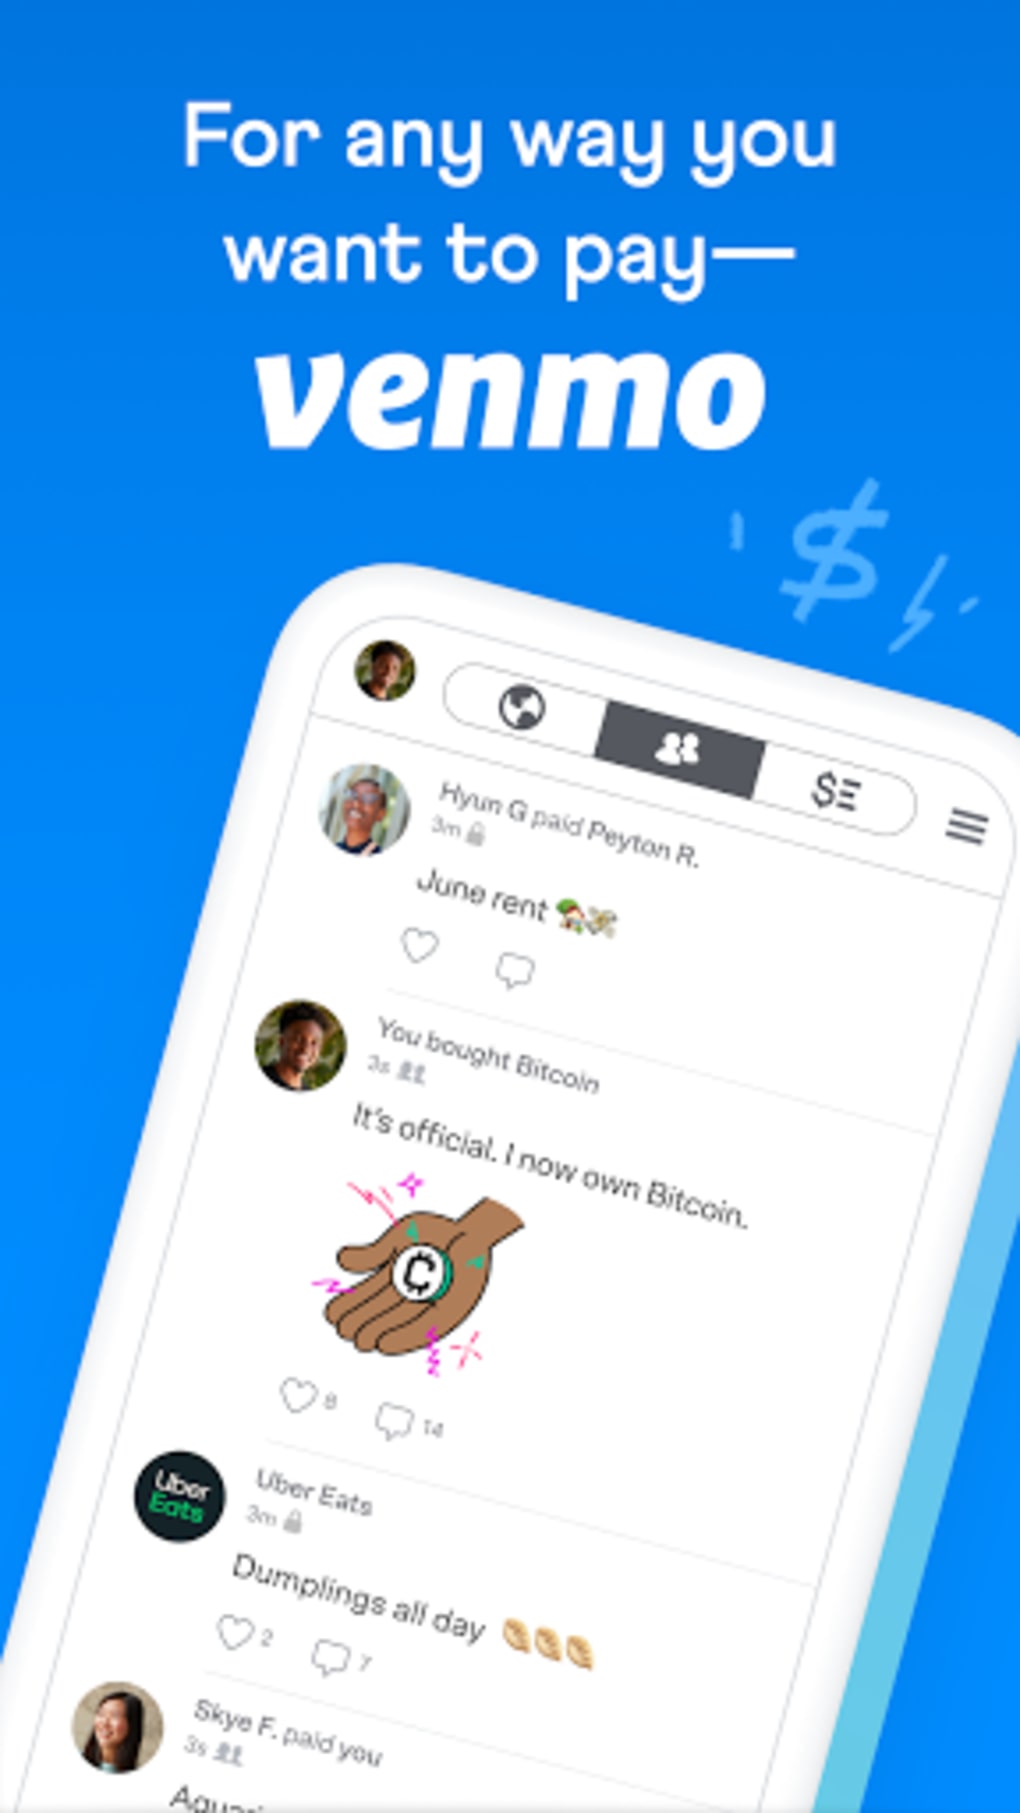 does venmo app work in canada